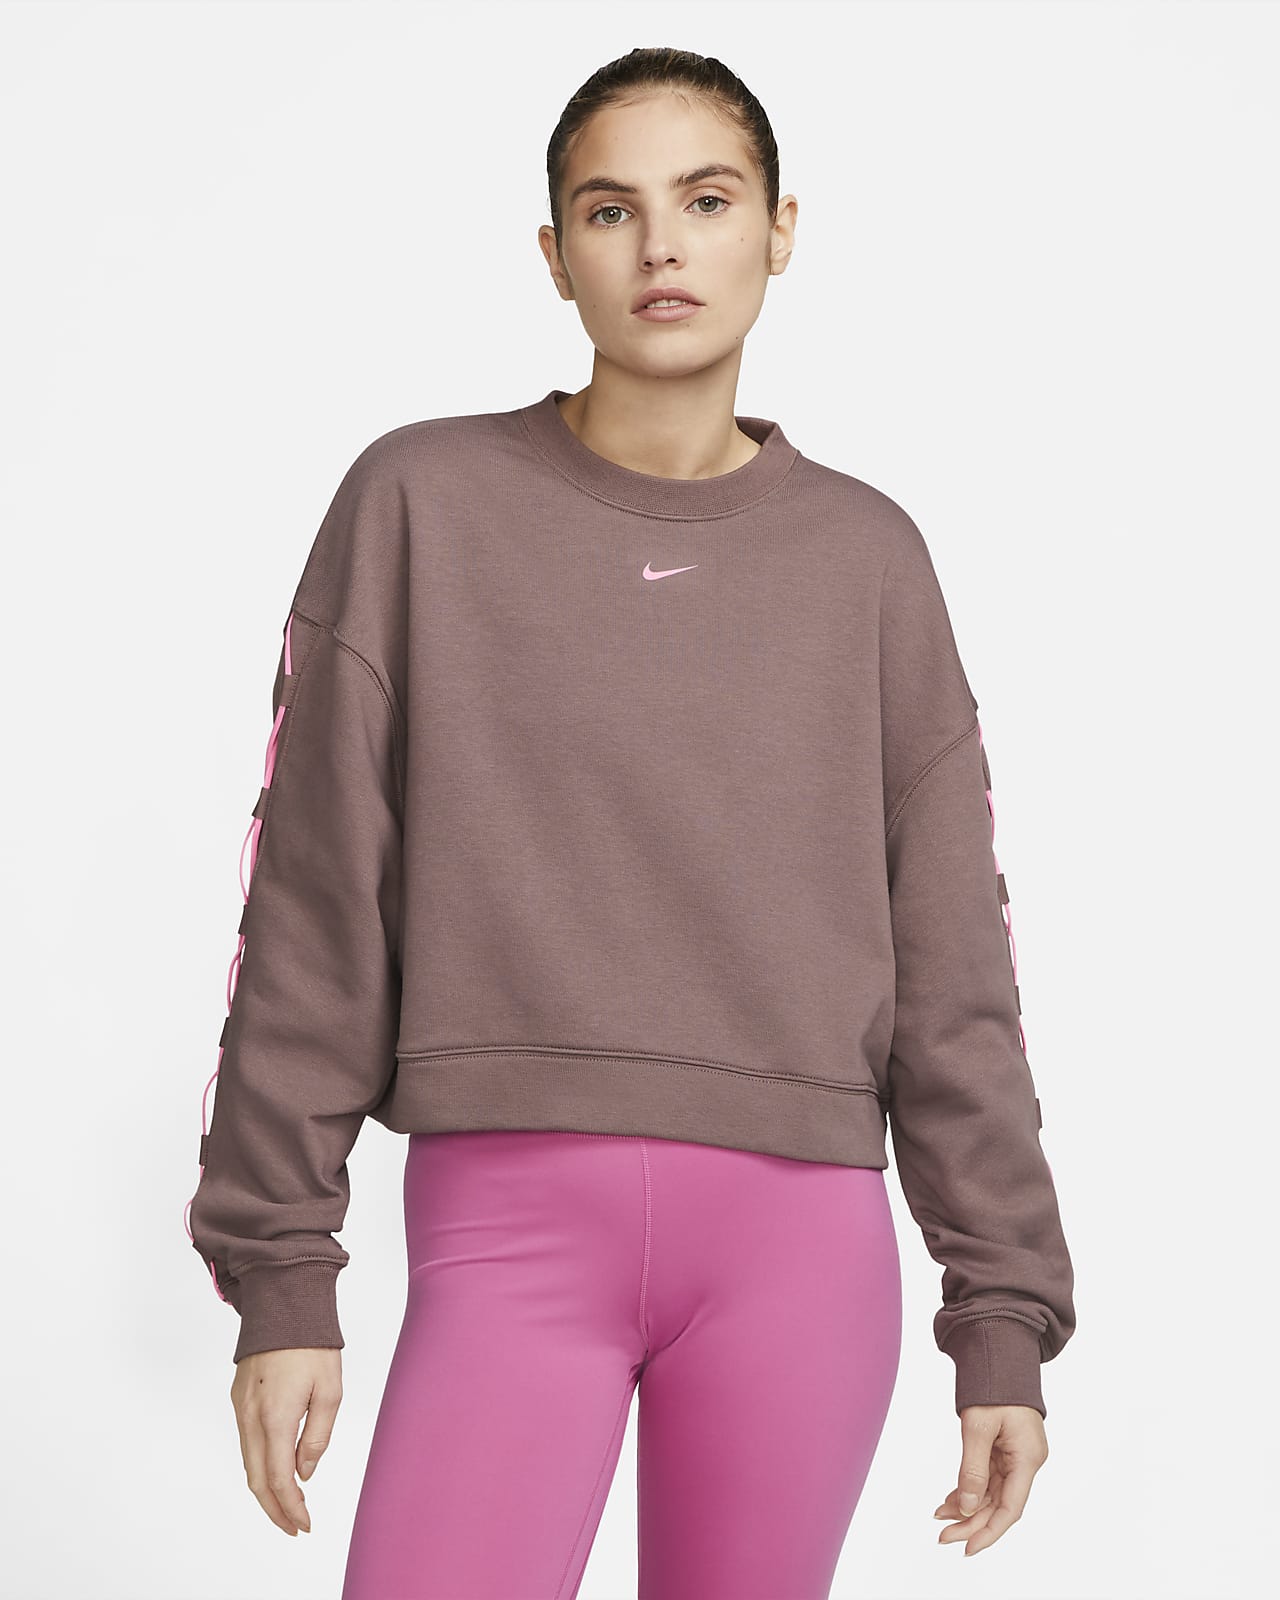 Nike Dri-FIT Get Fit Women's Sweatshirt. Nike LU